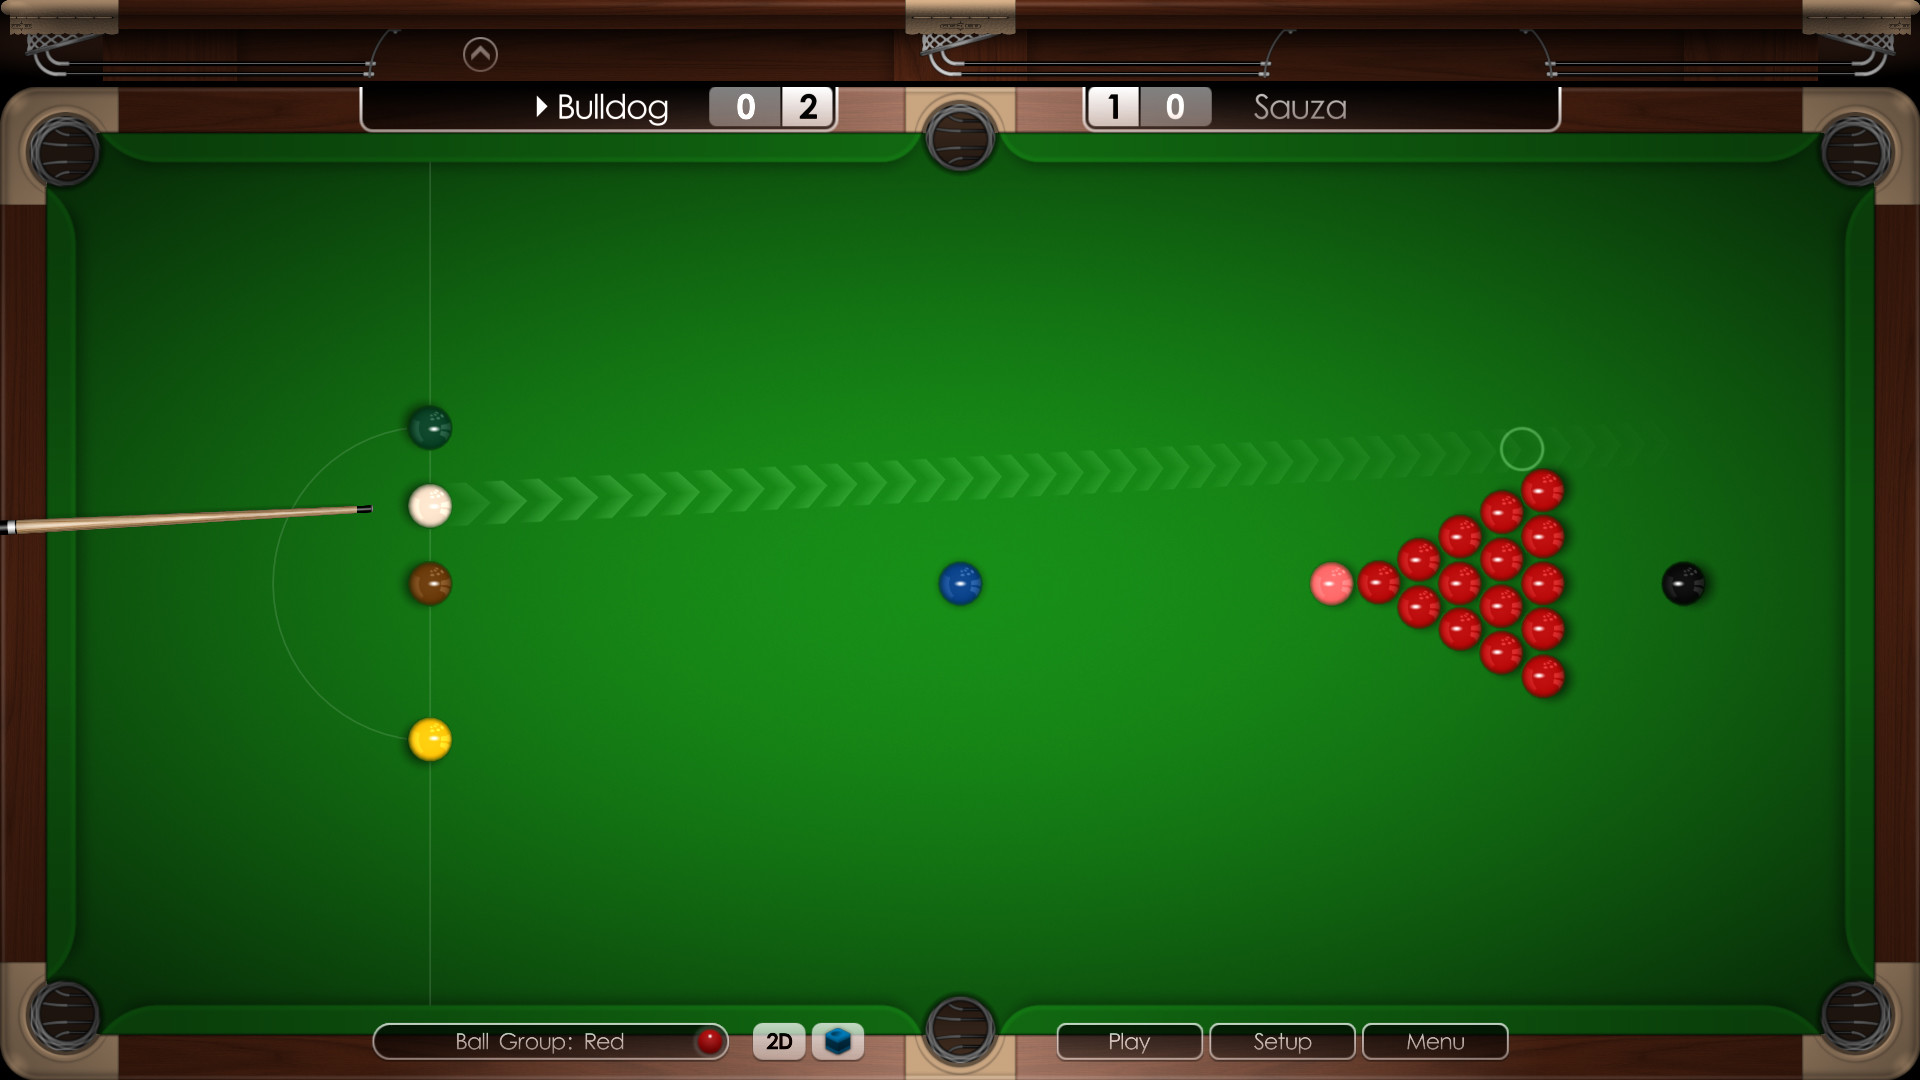 Cue Club 2: Pool & Snooker screenshot